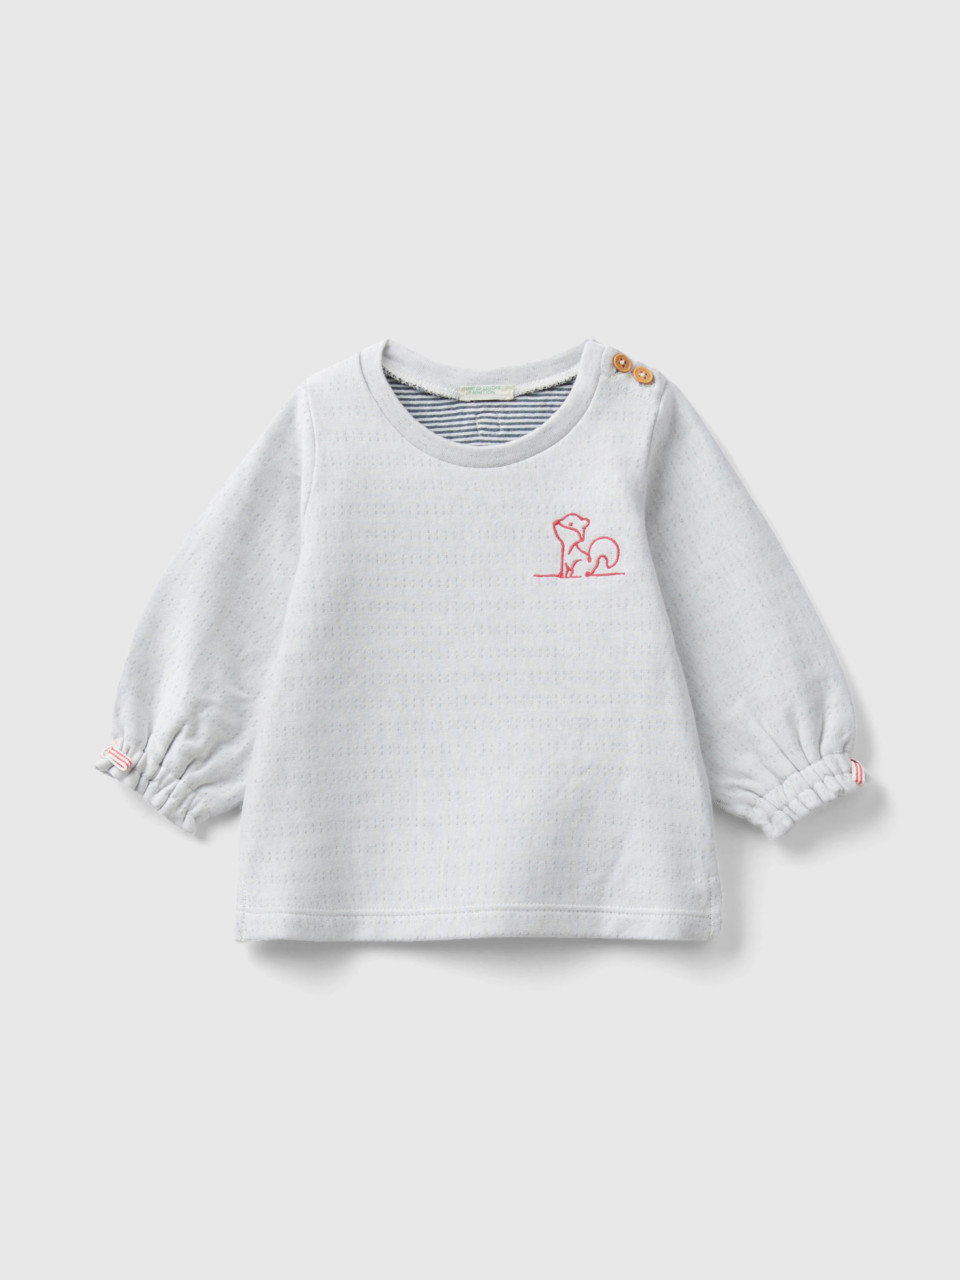 Benetton, Striped Sweatshirt With Embroidery, Creamy White, Kids